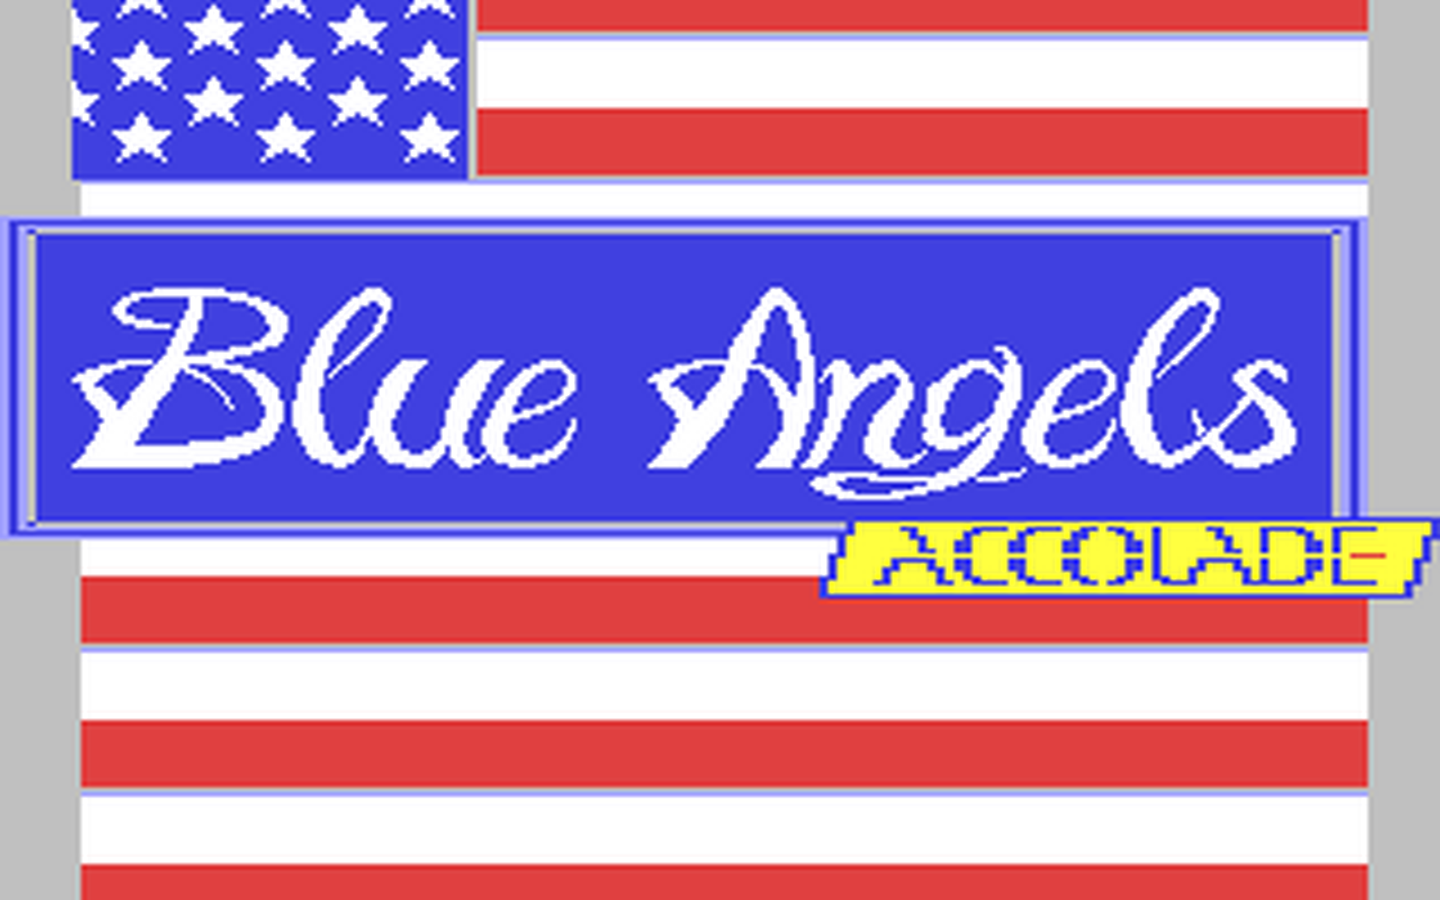 C64 GameBase Blue_Angels_-_Formation_Flight_Simulation Accolade 1989